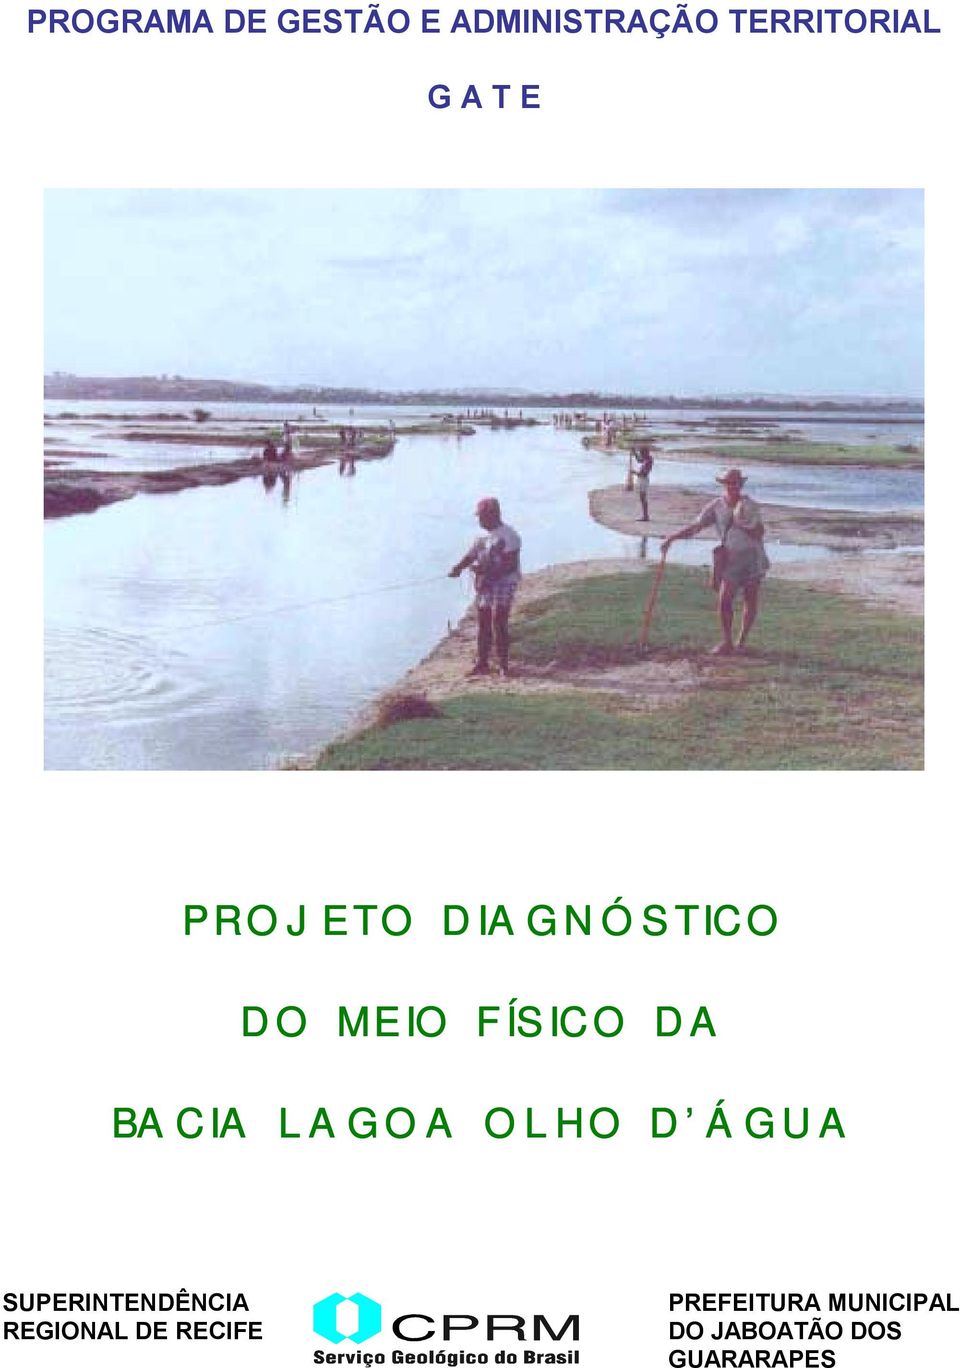 LAGOA OLHO D ÁGUA SUPERINTENDÊNCIA REGIONAL DE